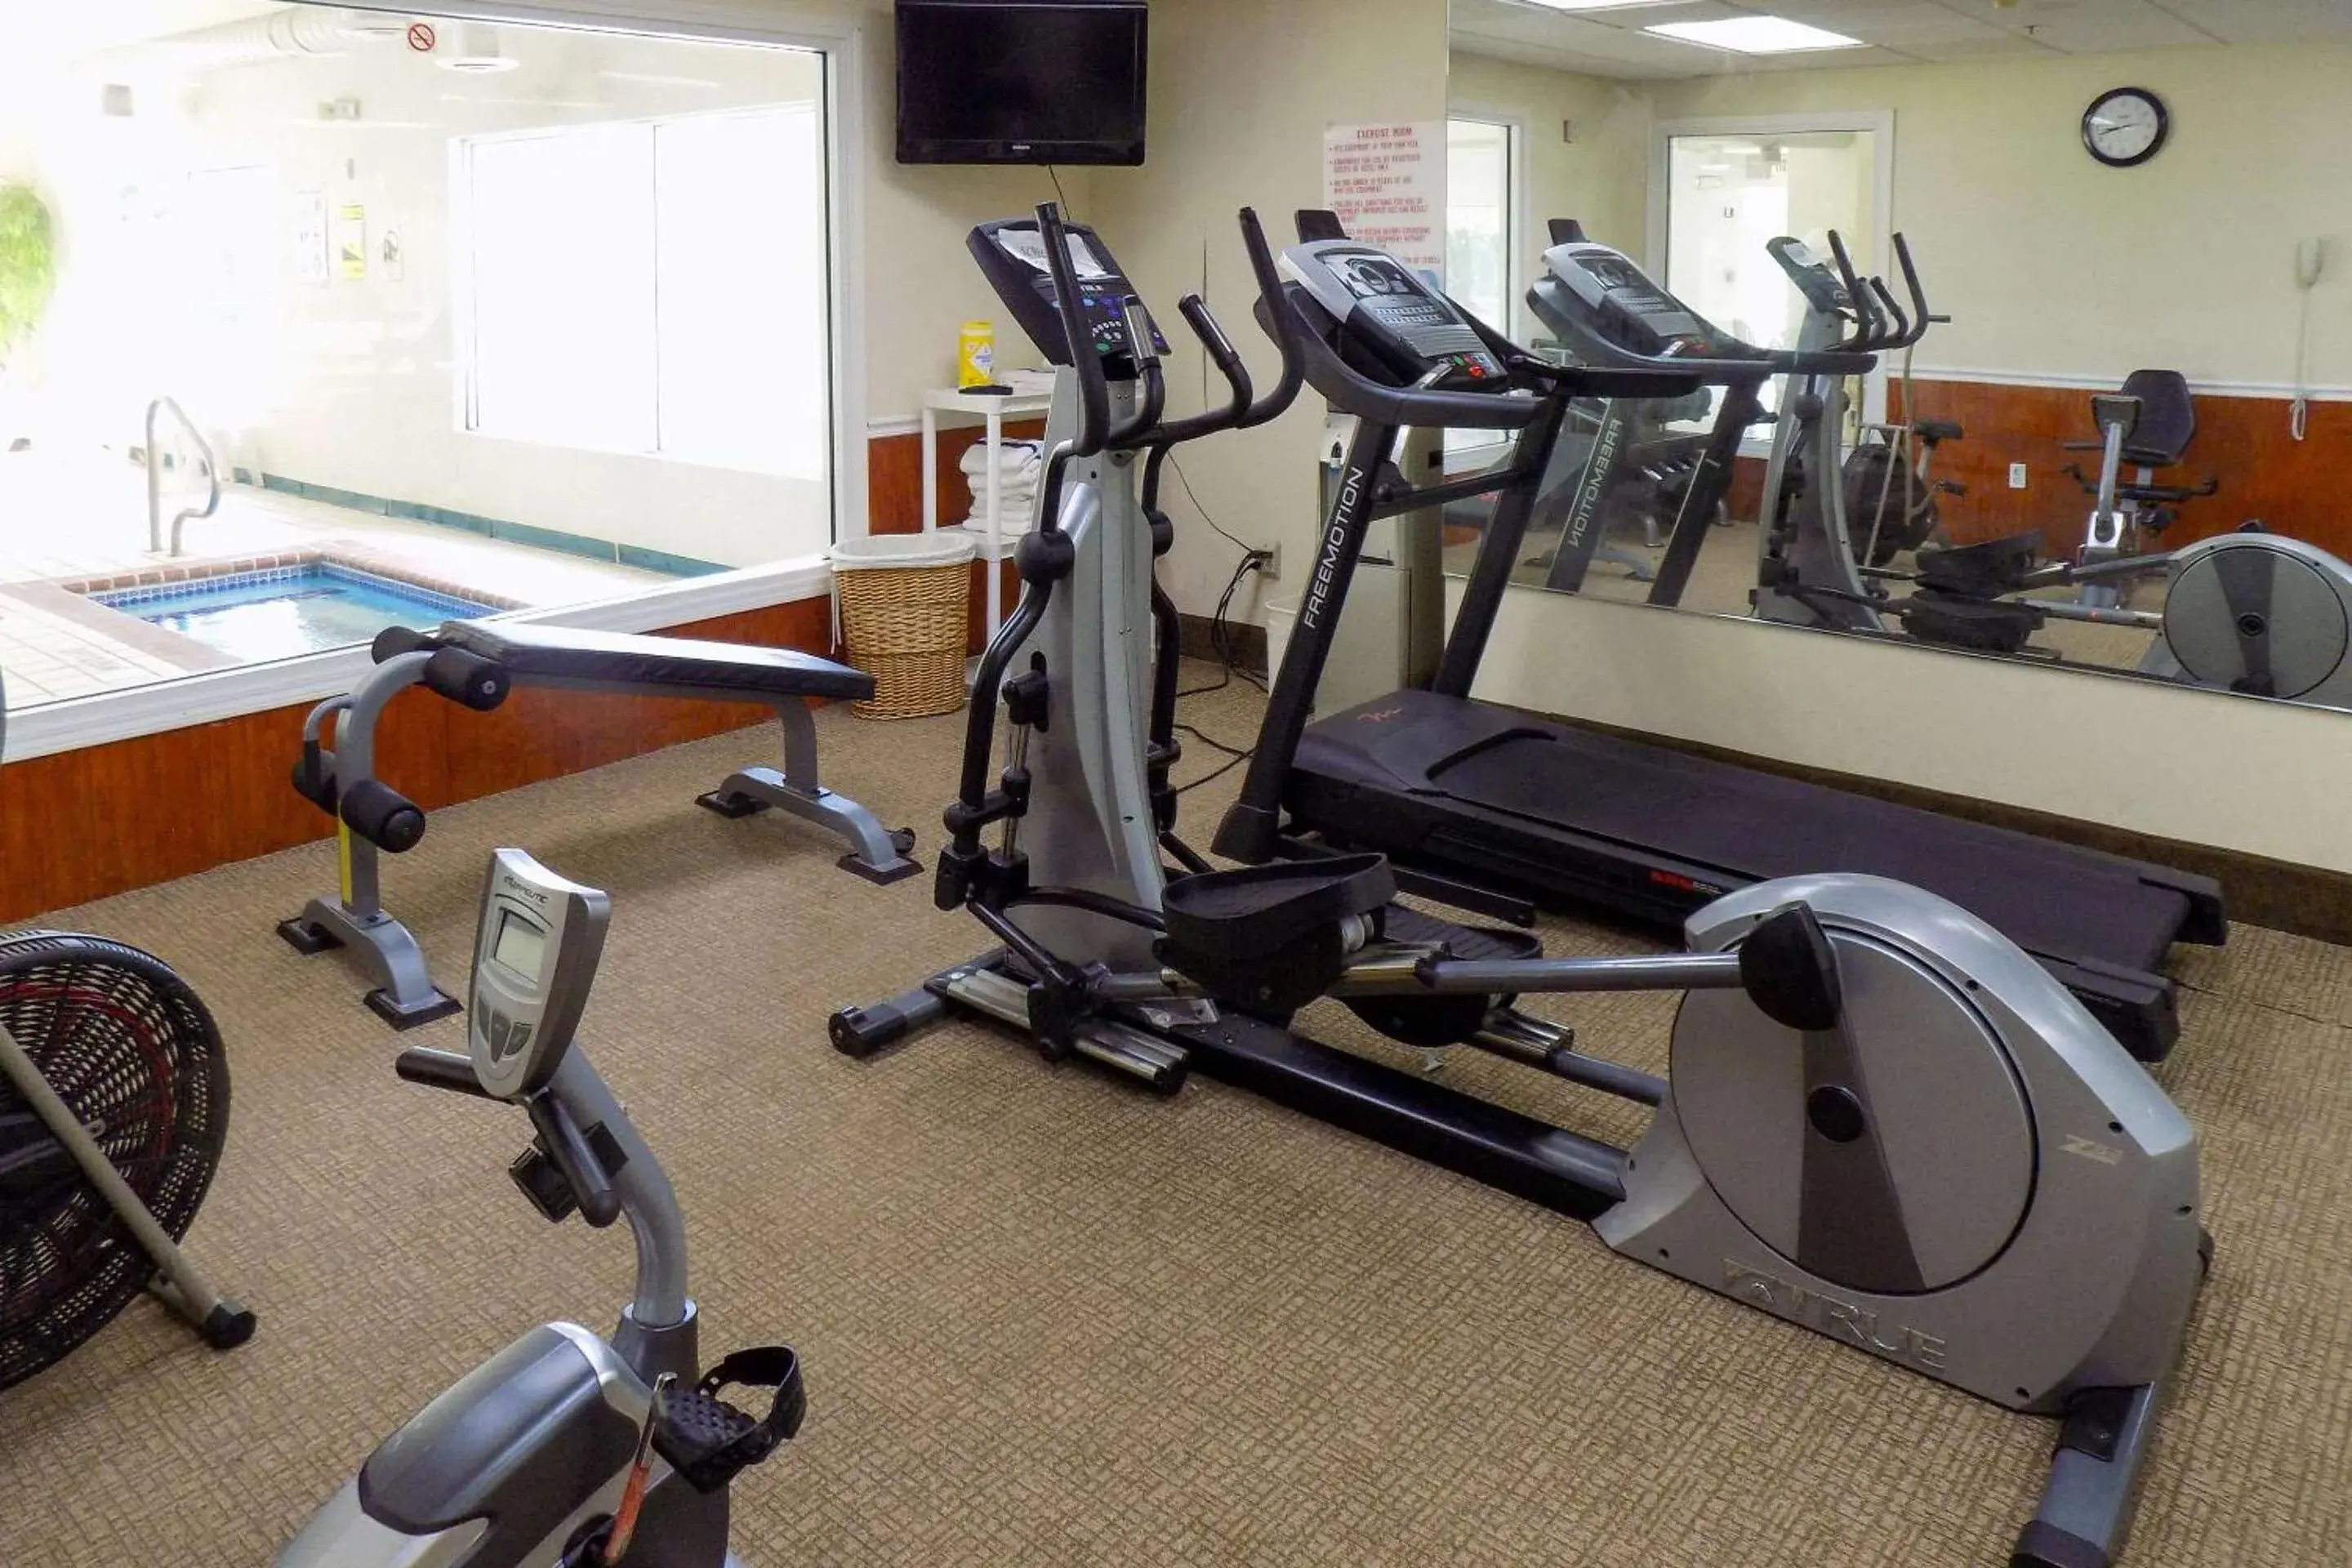 Fitness centre/facilities, Fitness Center/Facilities in Quality Inn Kingdom City, MO